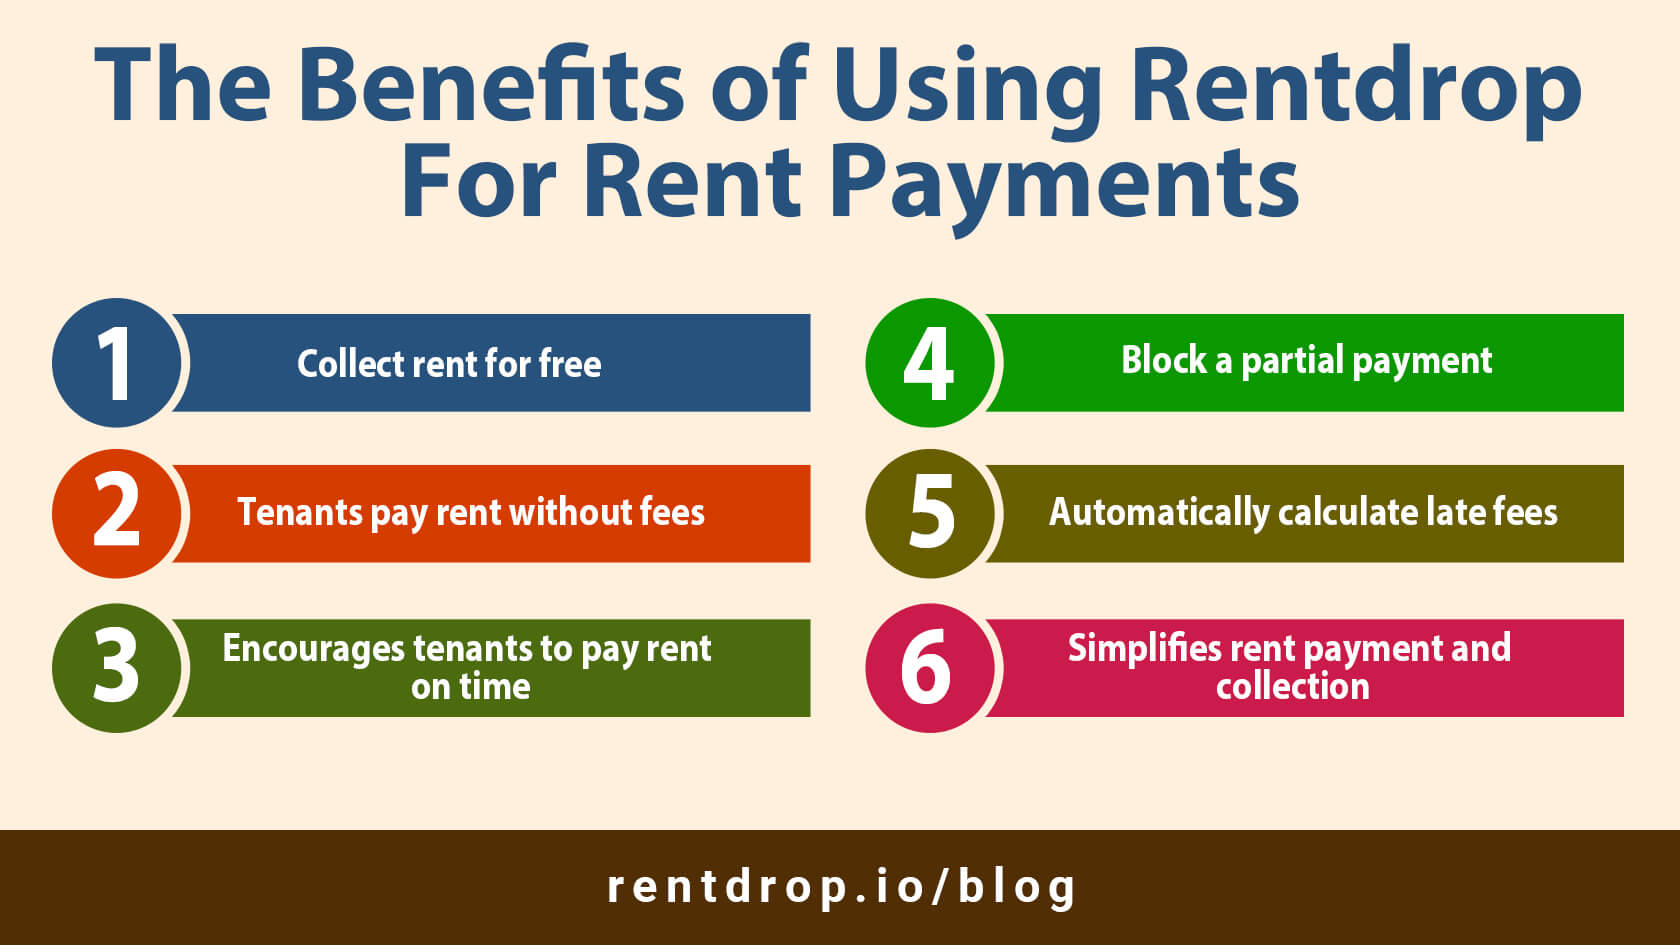 venmo recurring payments asset rentdrop